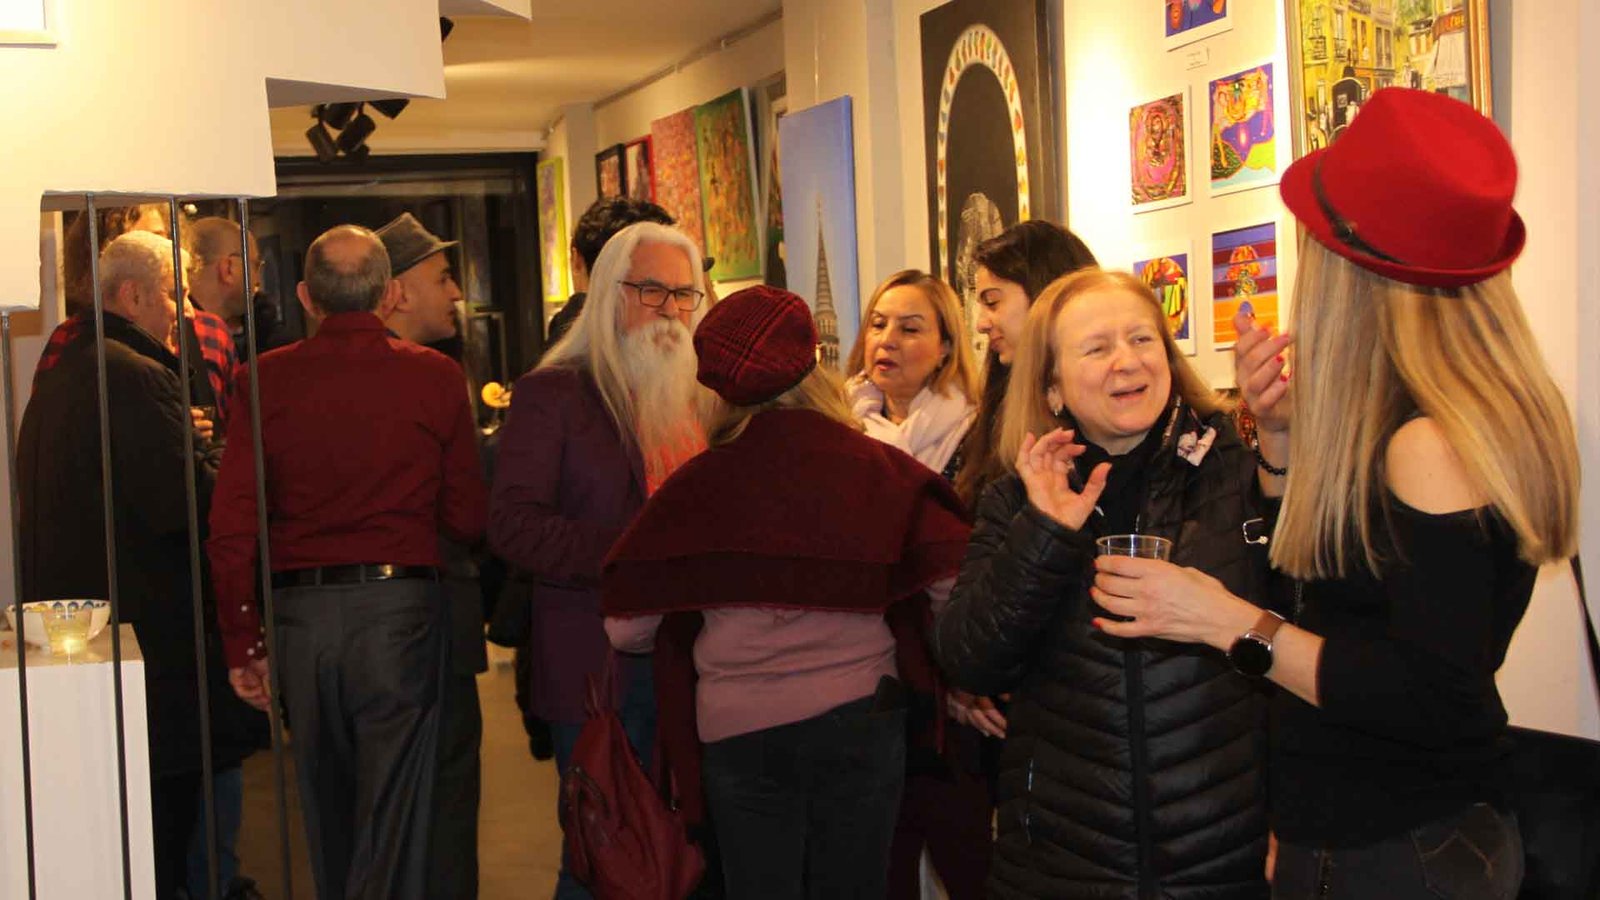 Next Pera Art Gallery’de “Love Makes All Things Possible” Karma Sergisi: Sanatseverlerin Buluşma Noktası